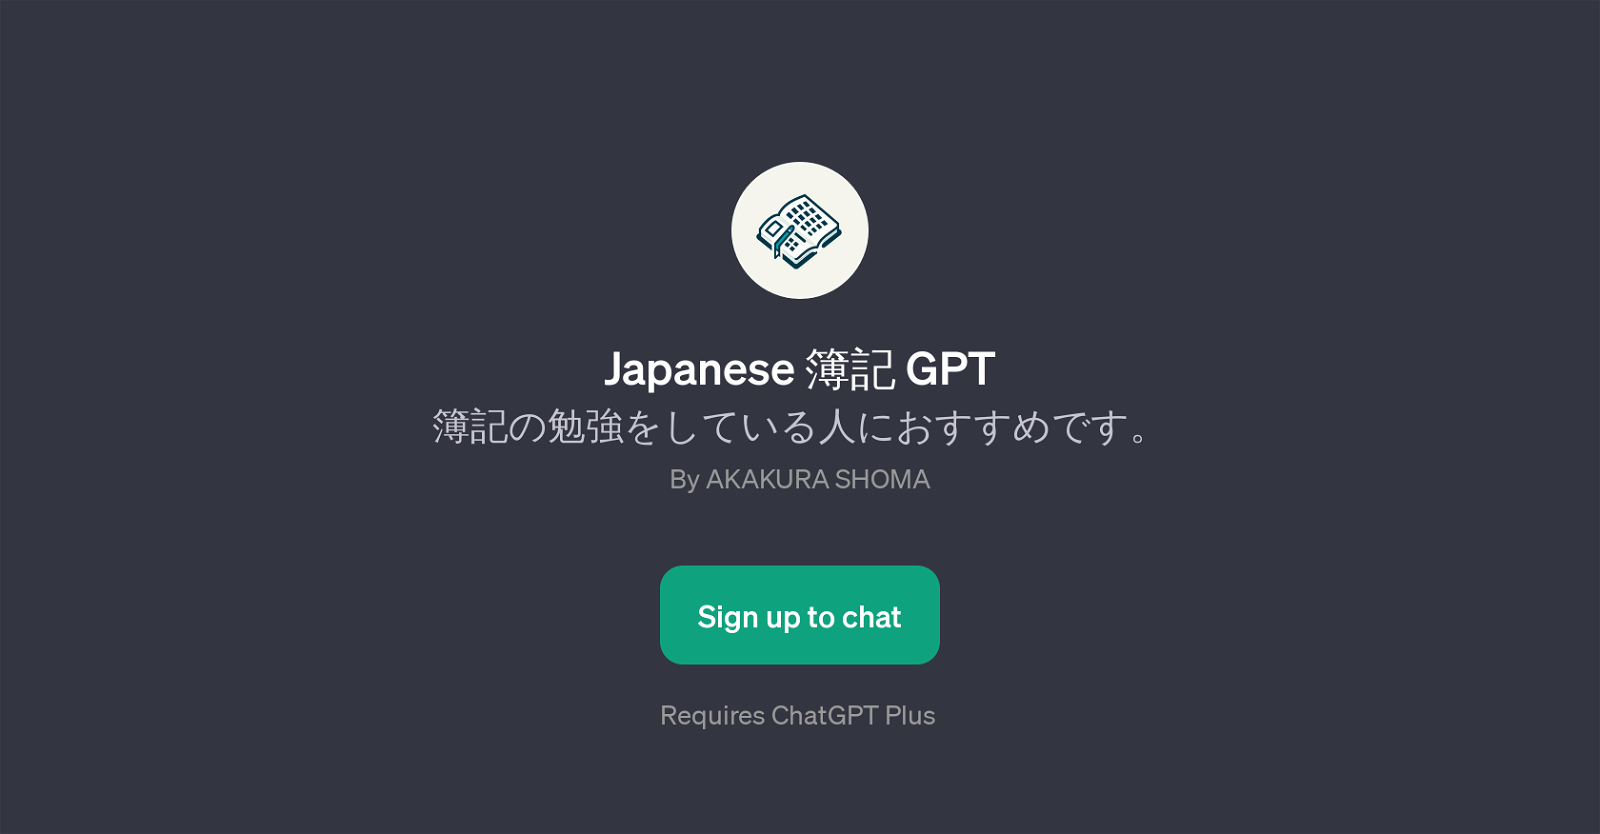 Japanese  GPT website